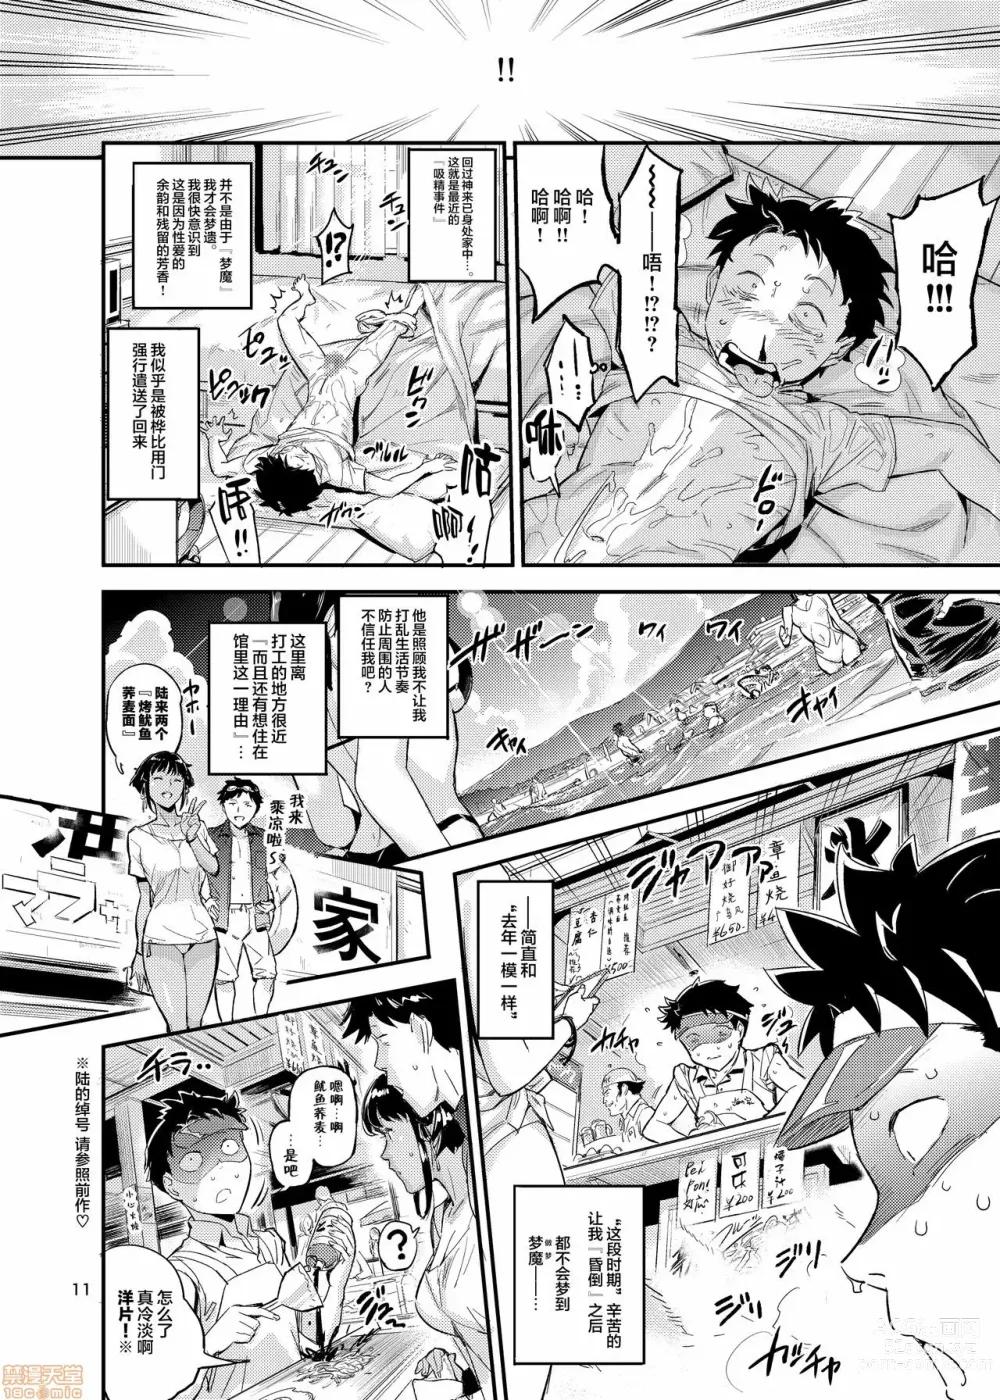 Page 12 of doujinshi 2